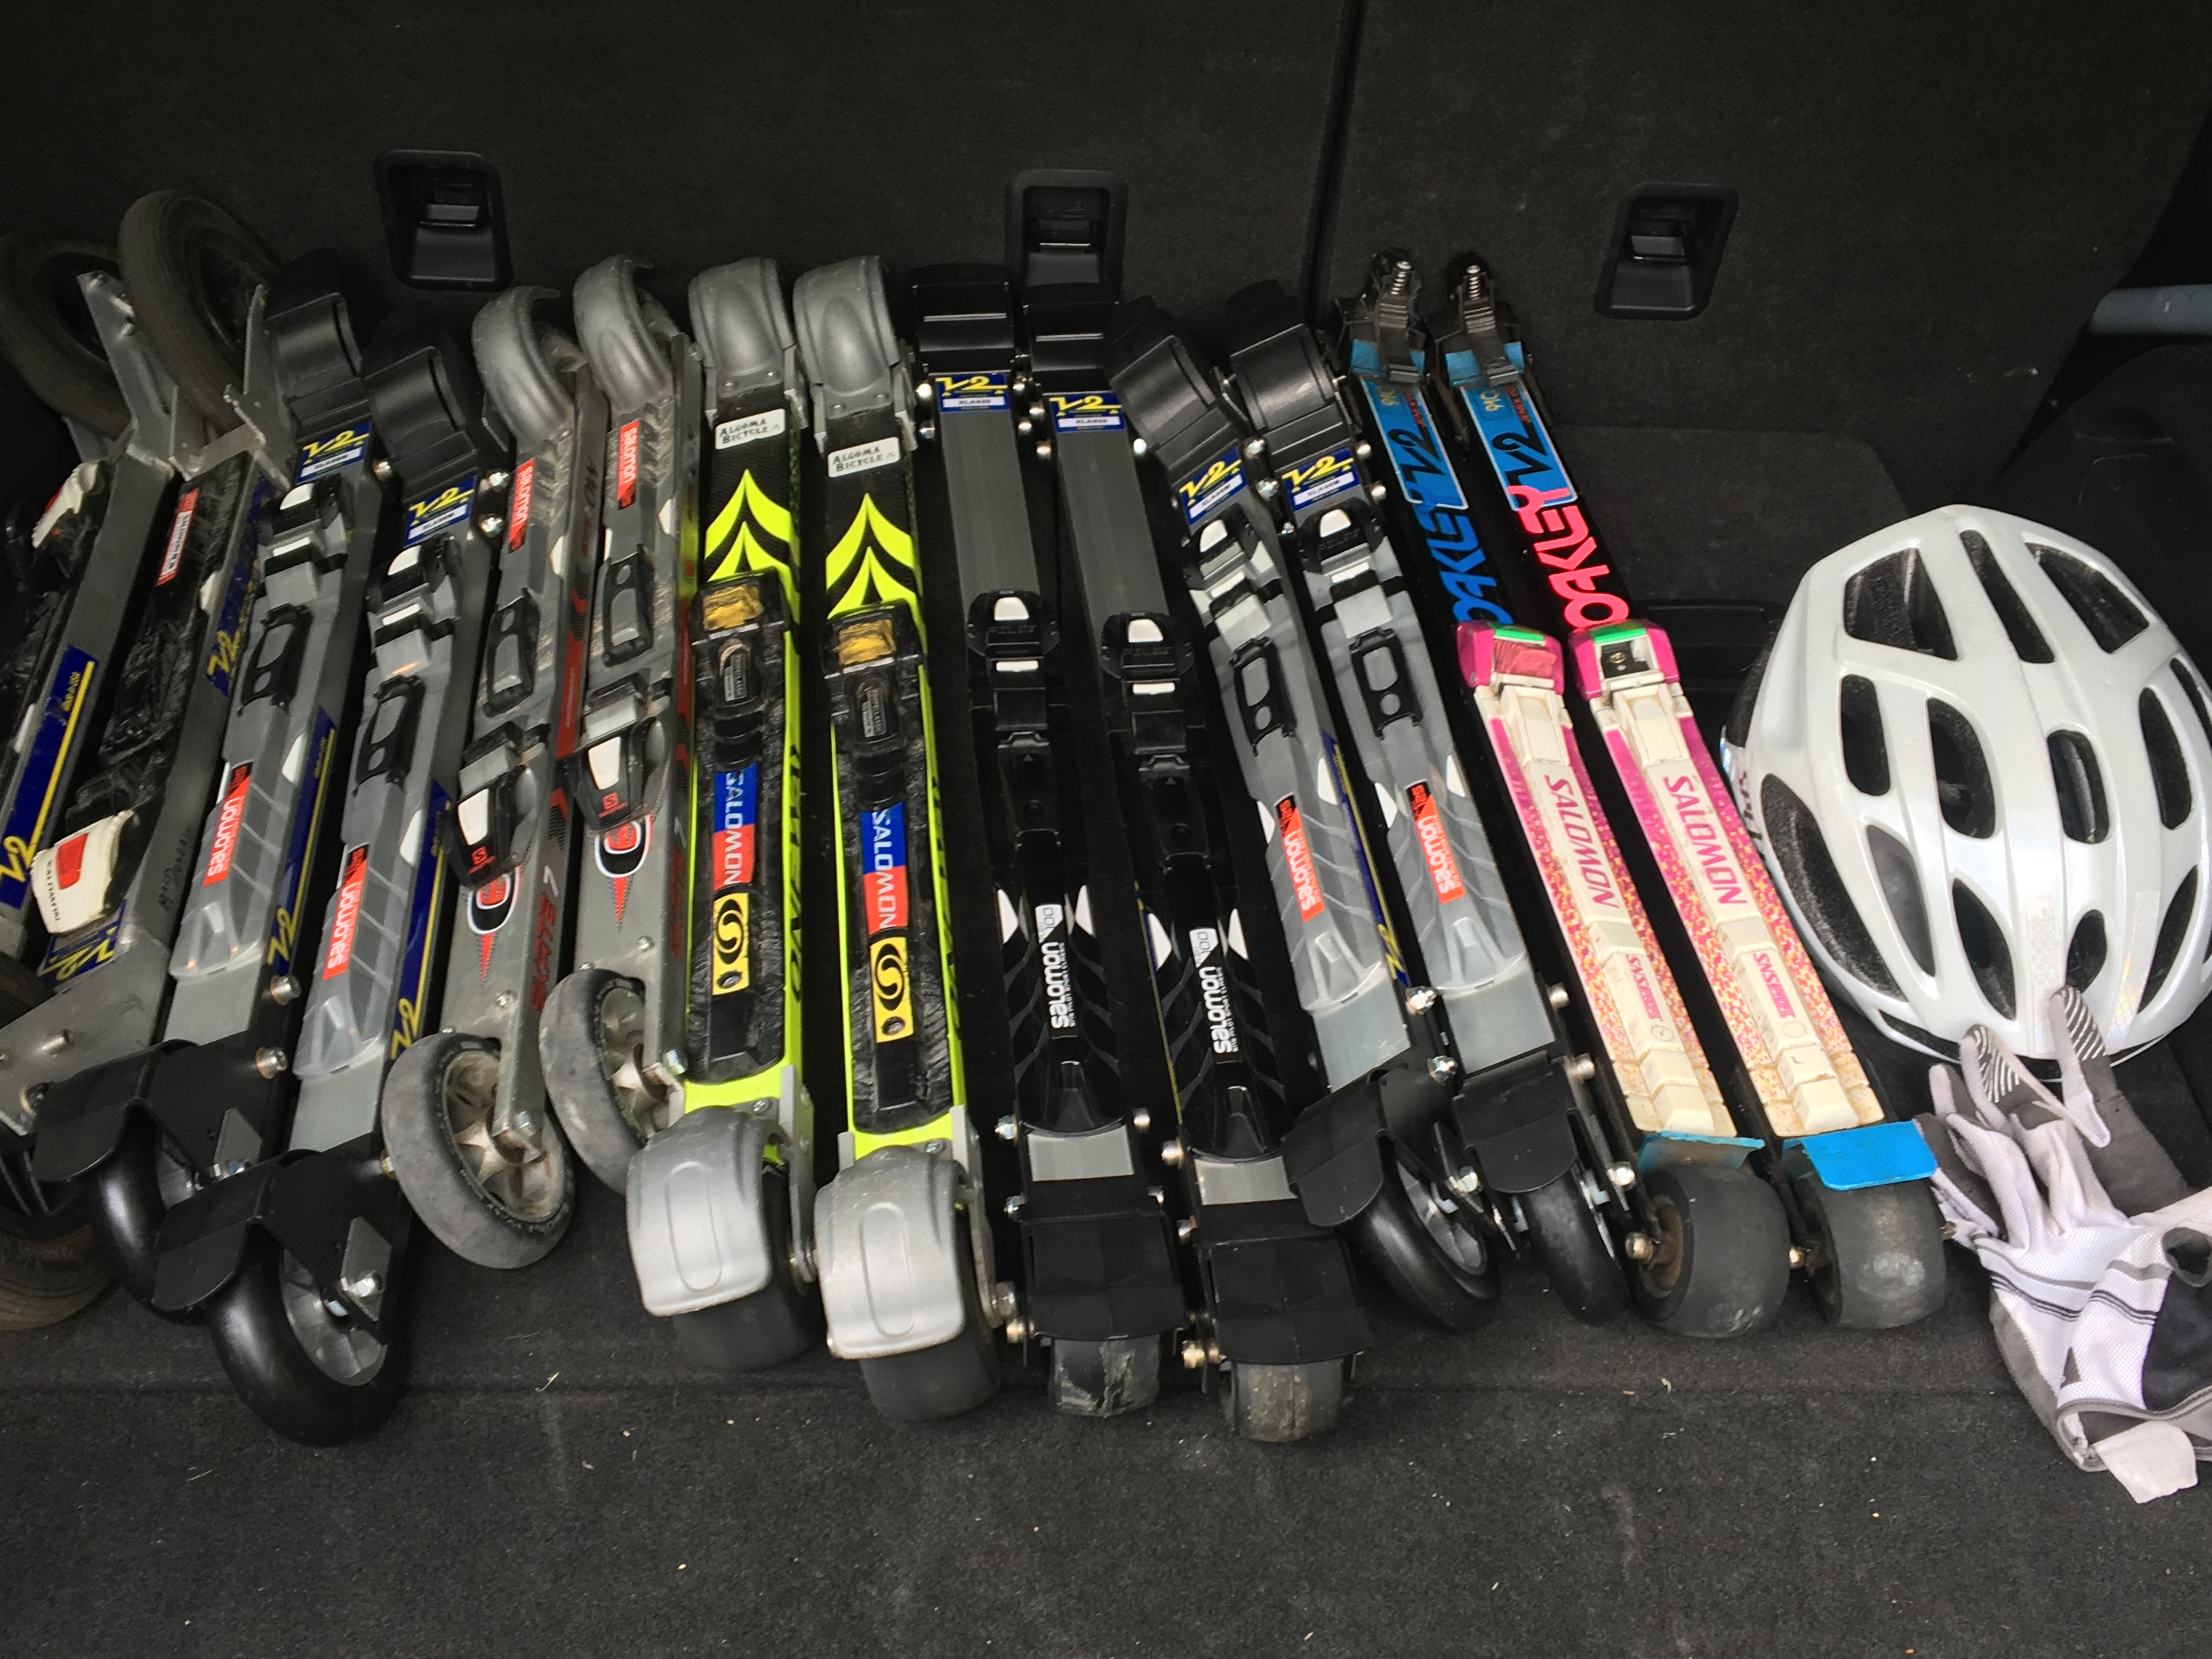 salomon roller skis